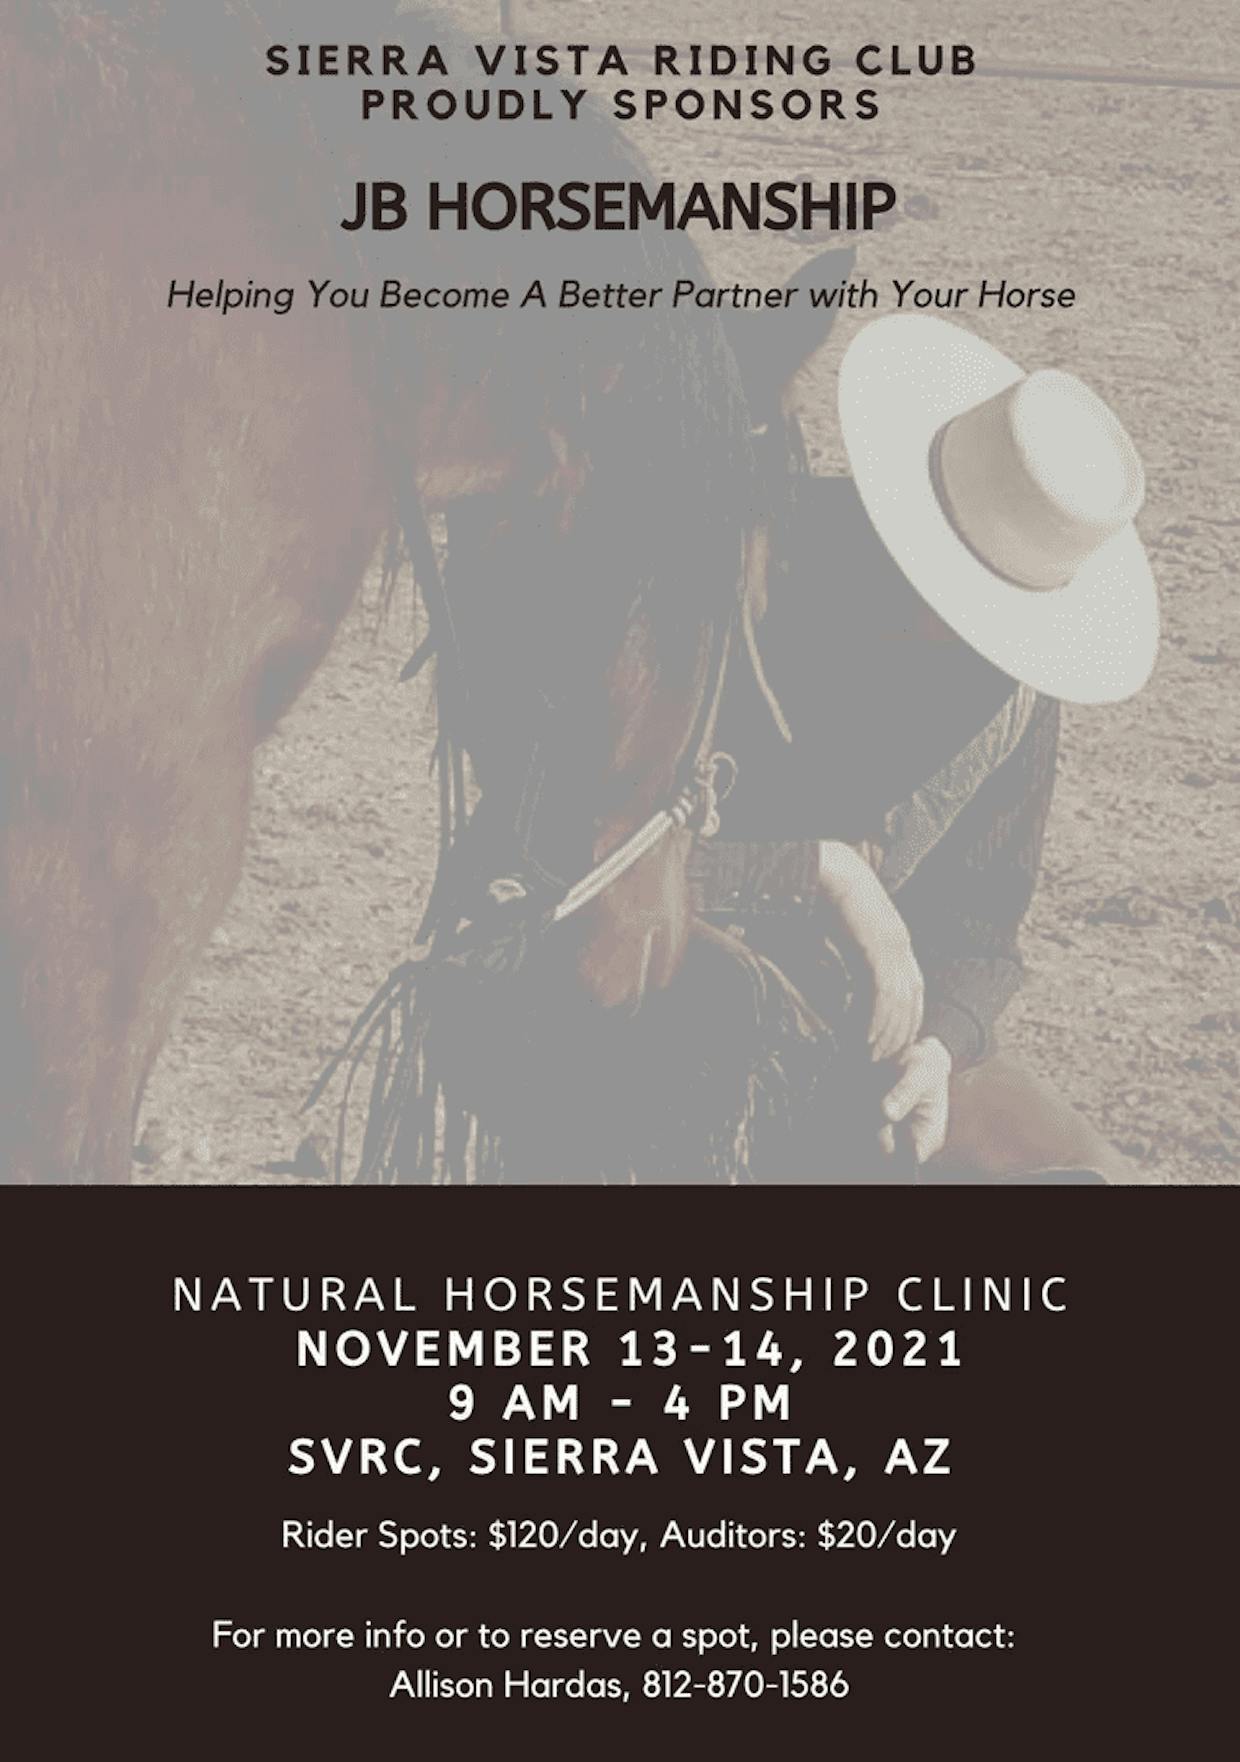 Natural Horsemanship Clinic PHOTO CREDIT: Sierra Vista Riding Club